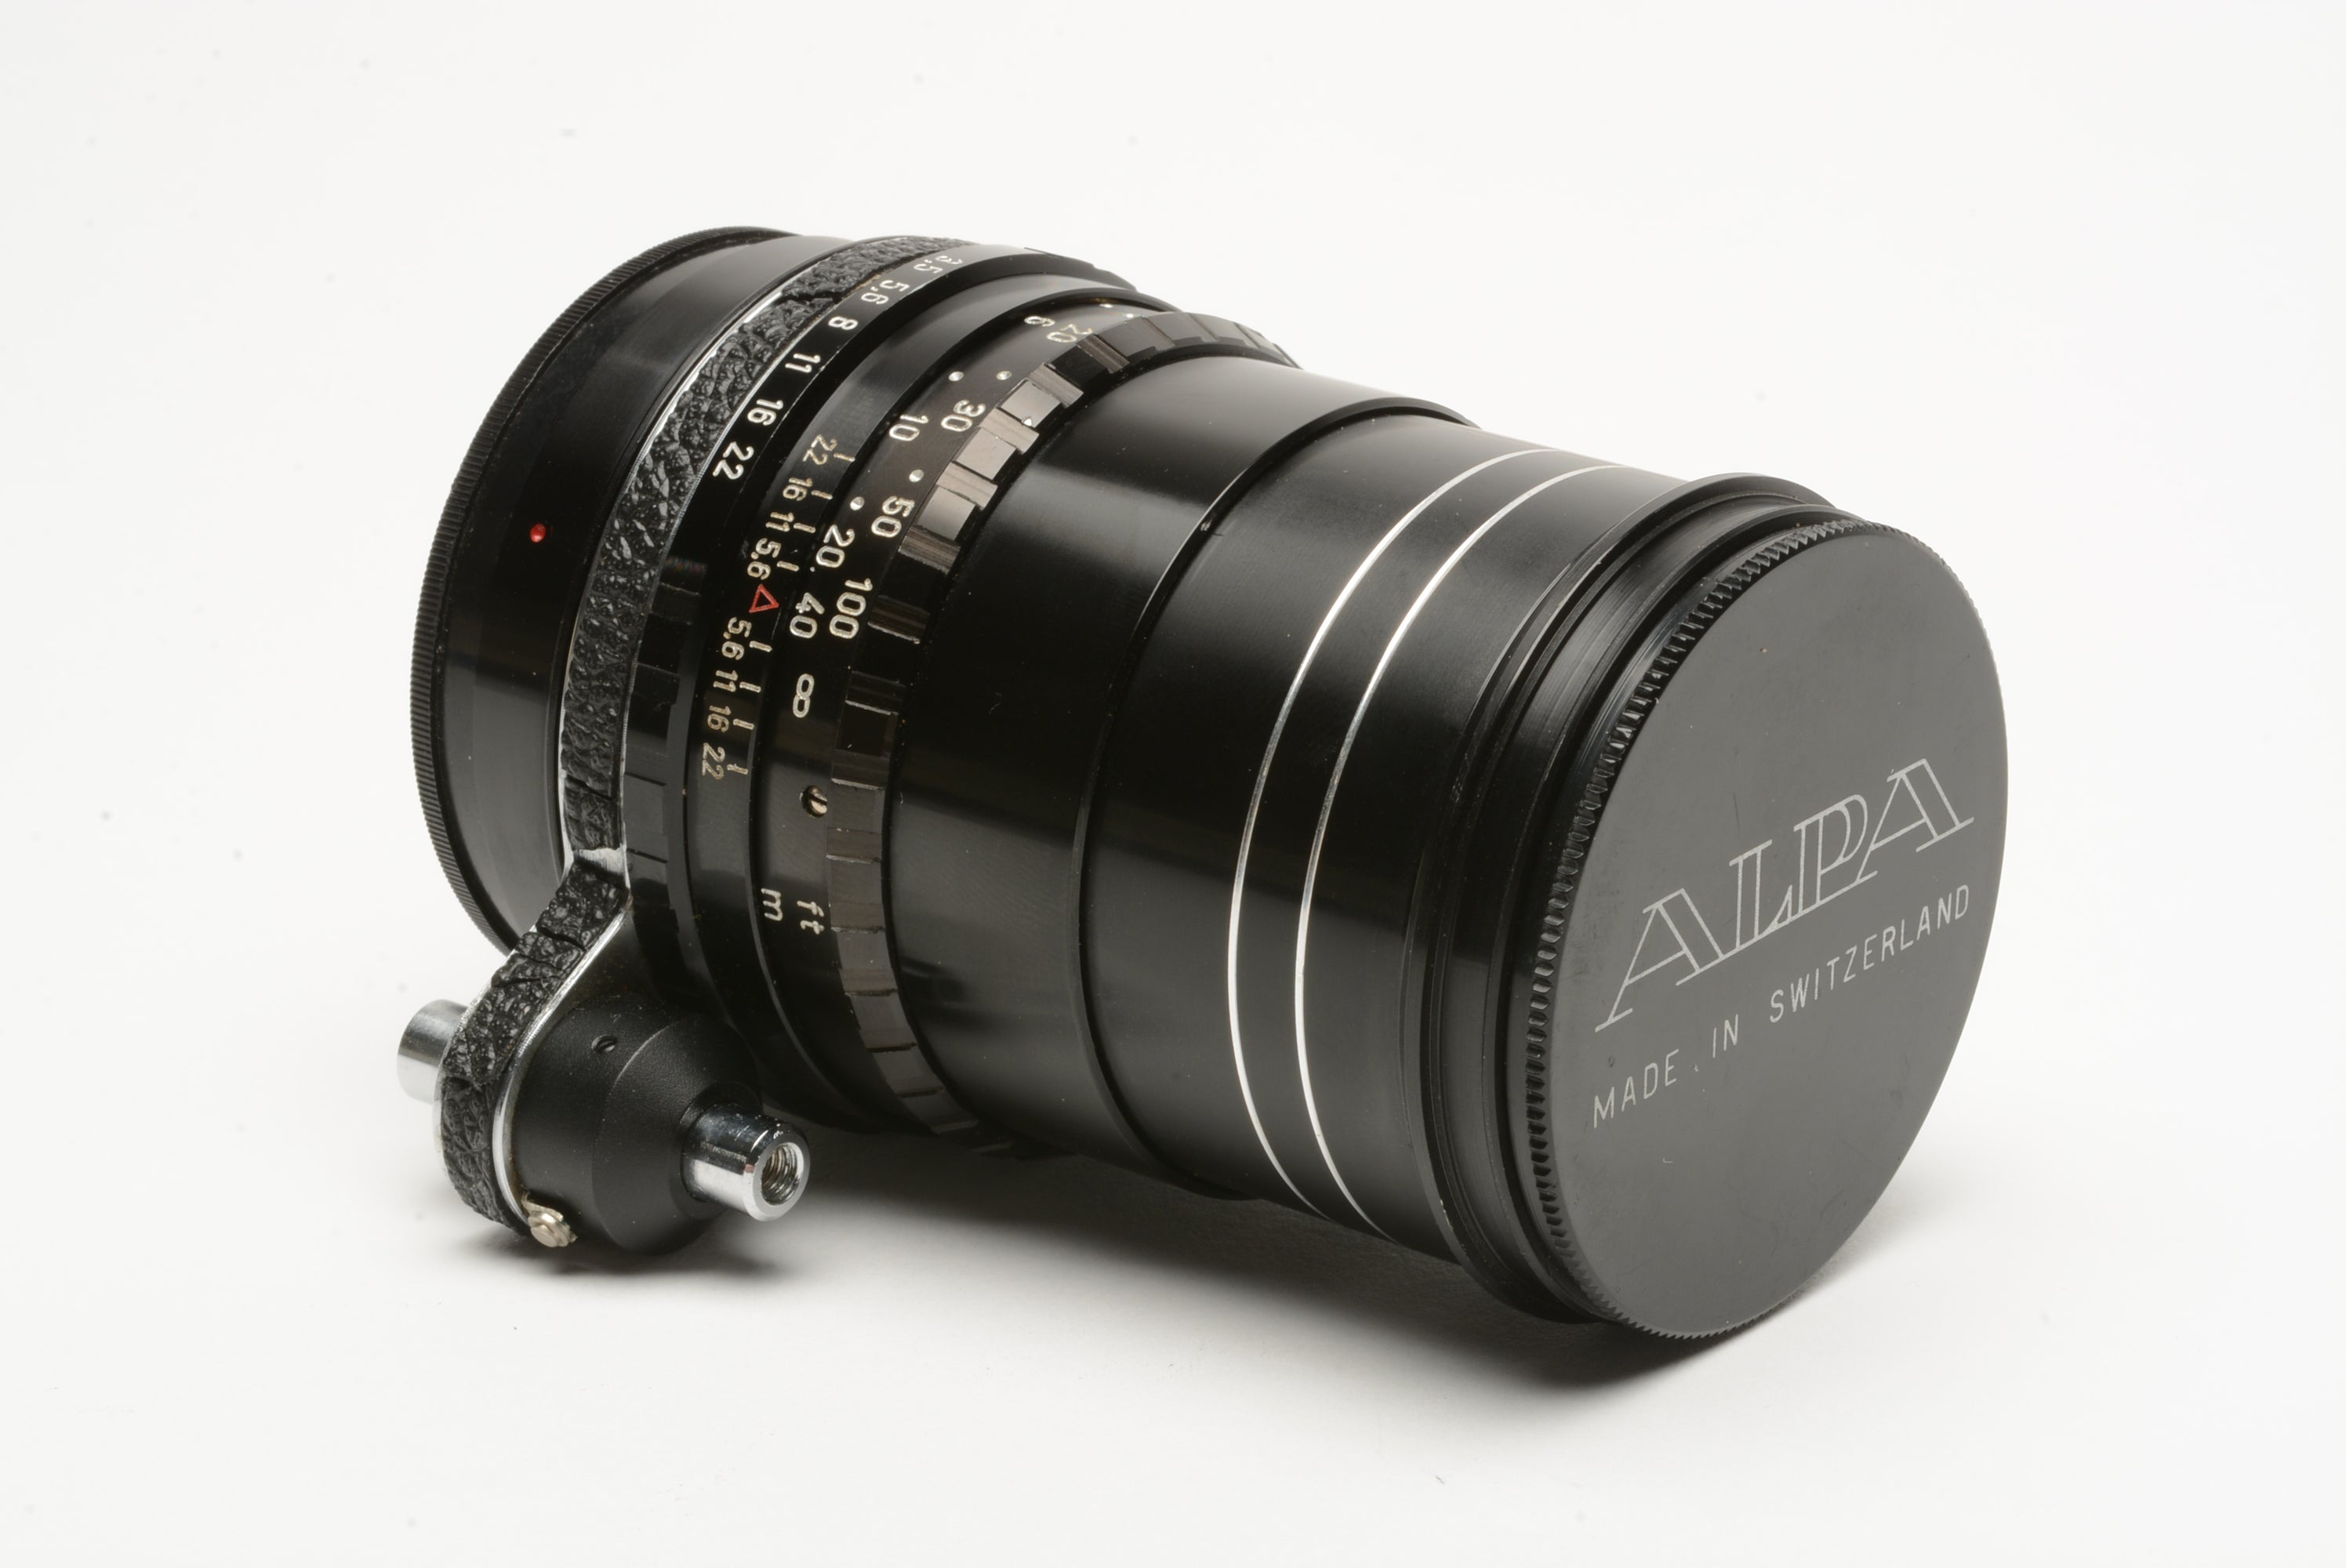 Alpa Tele Xenar Curtagon 135mm f3.5 lens